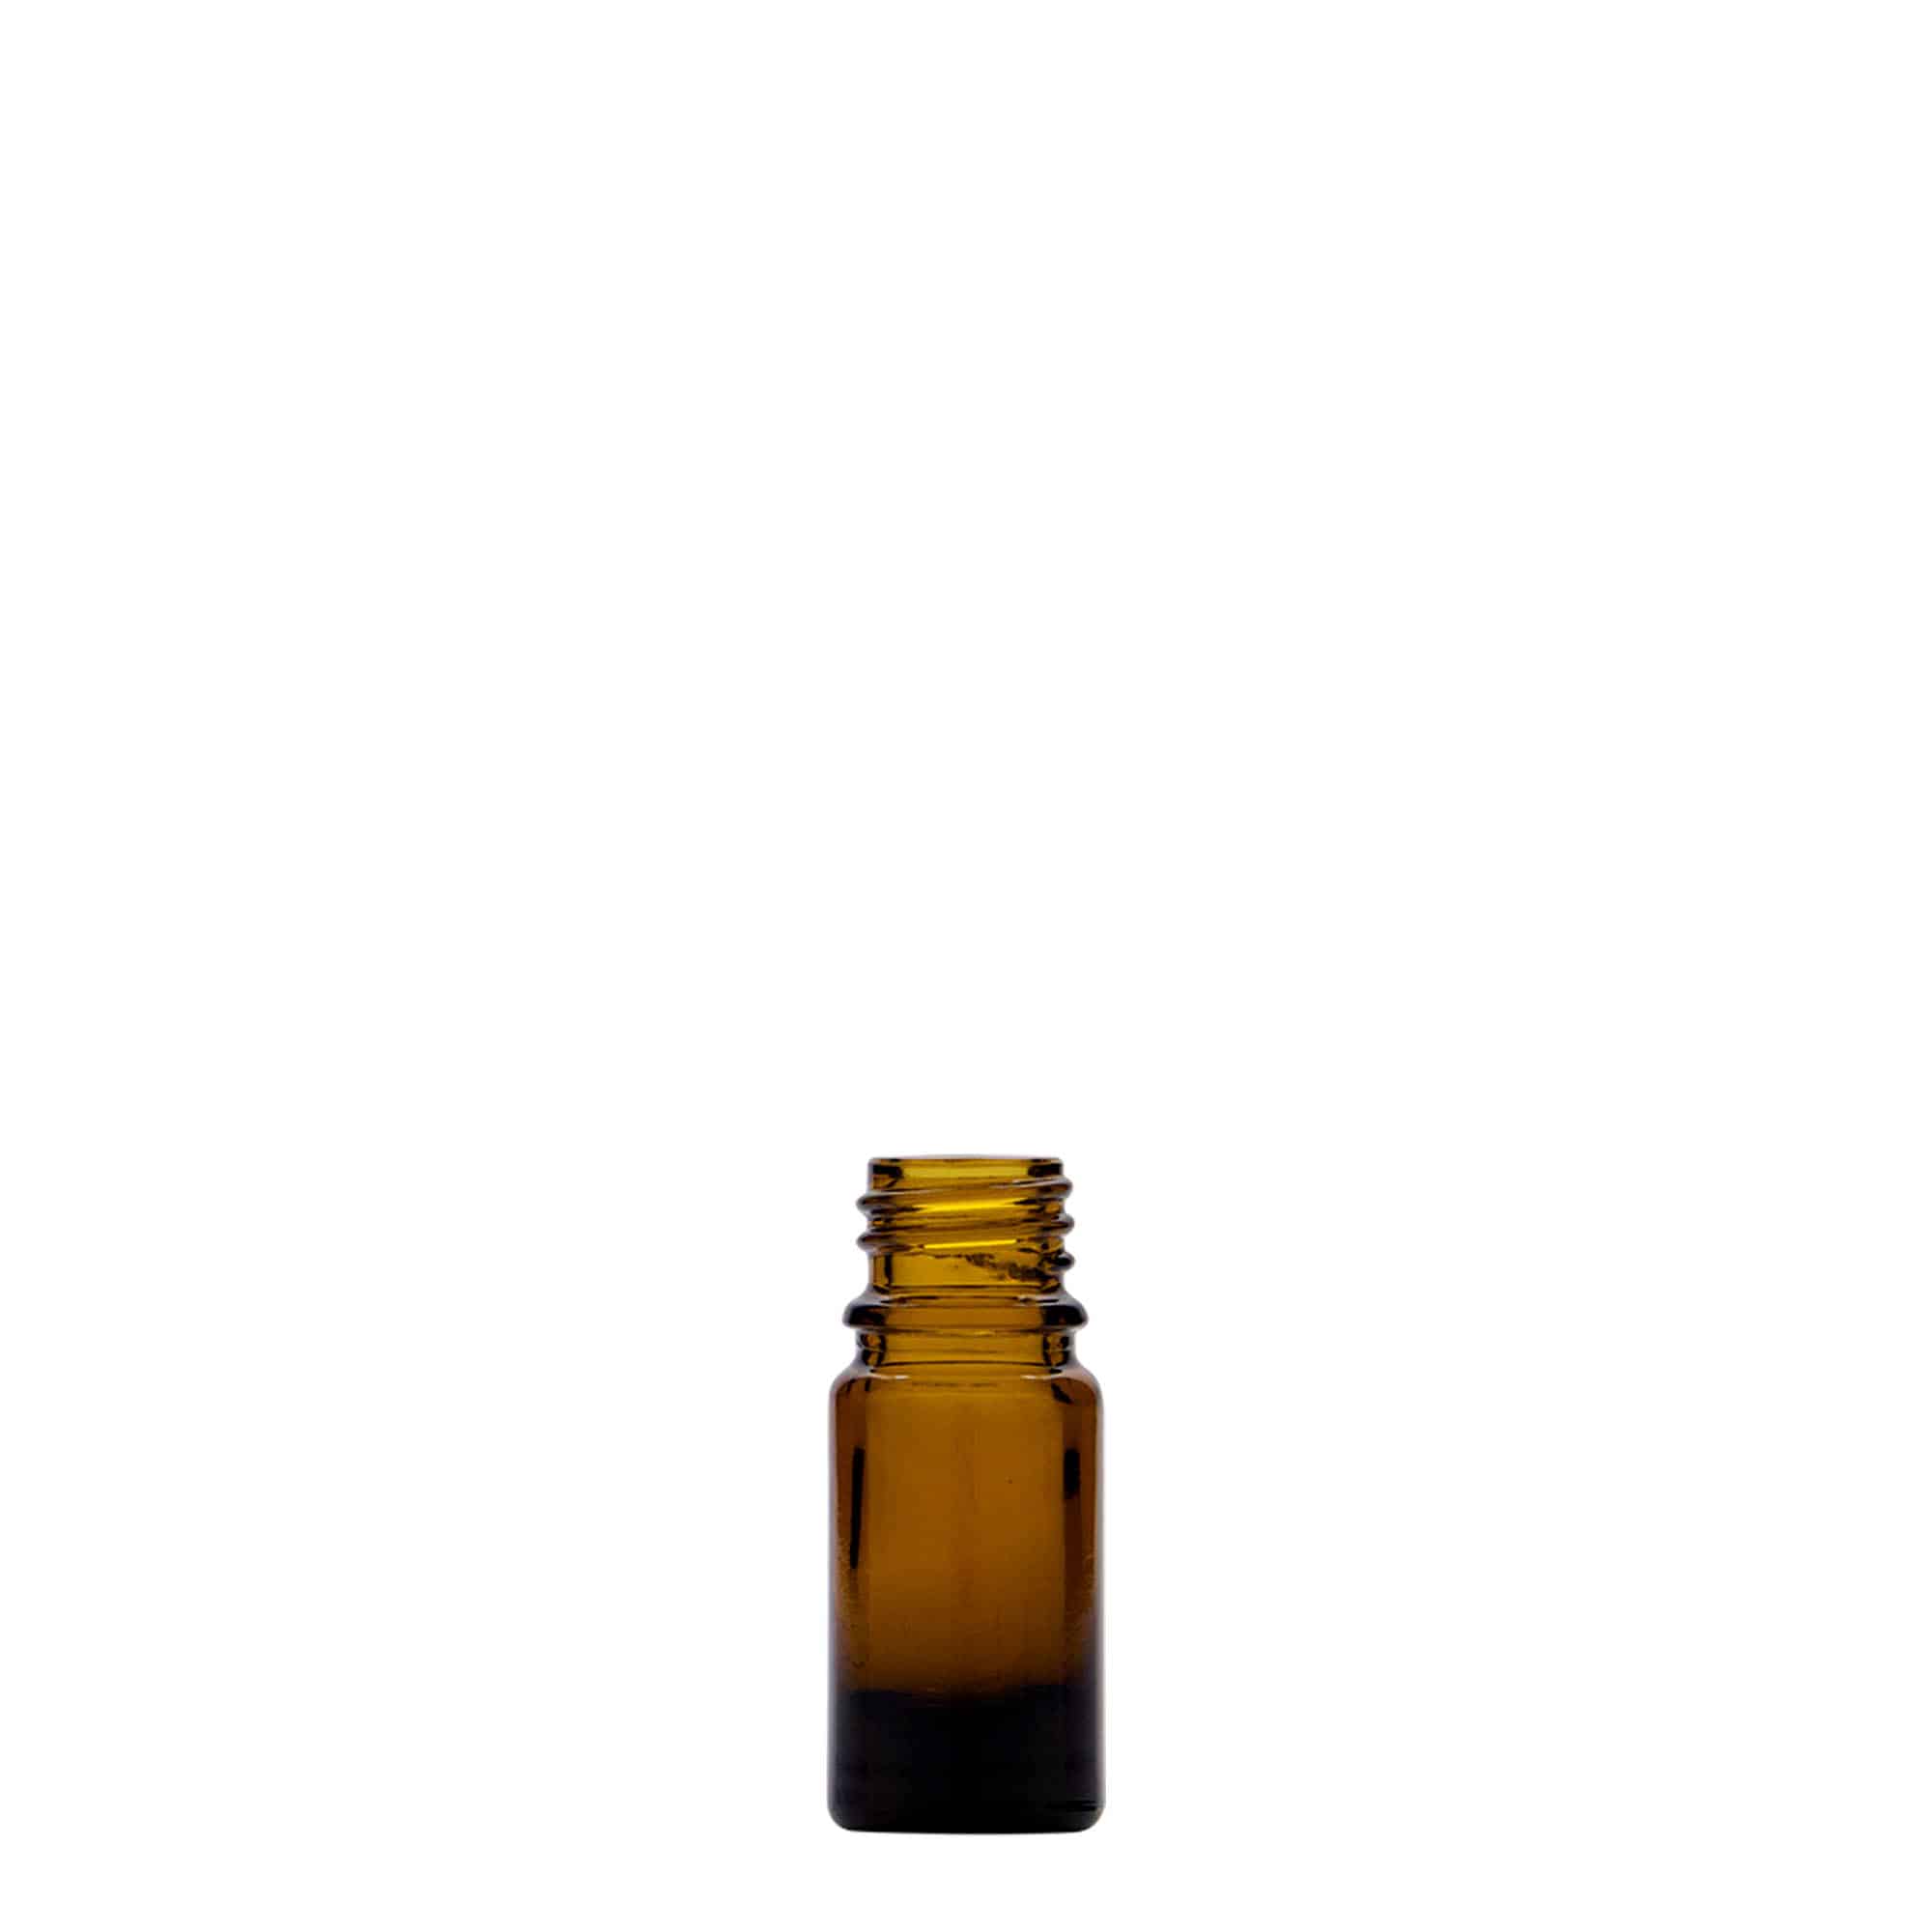 5 ml medicine bottle, glass, brown, closure: DIN 18